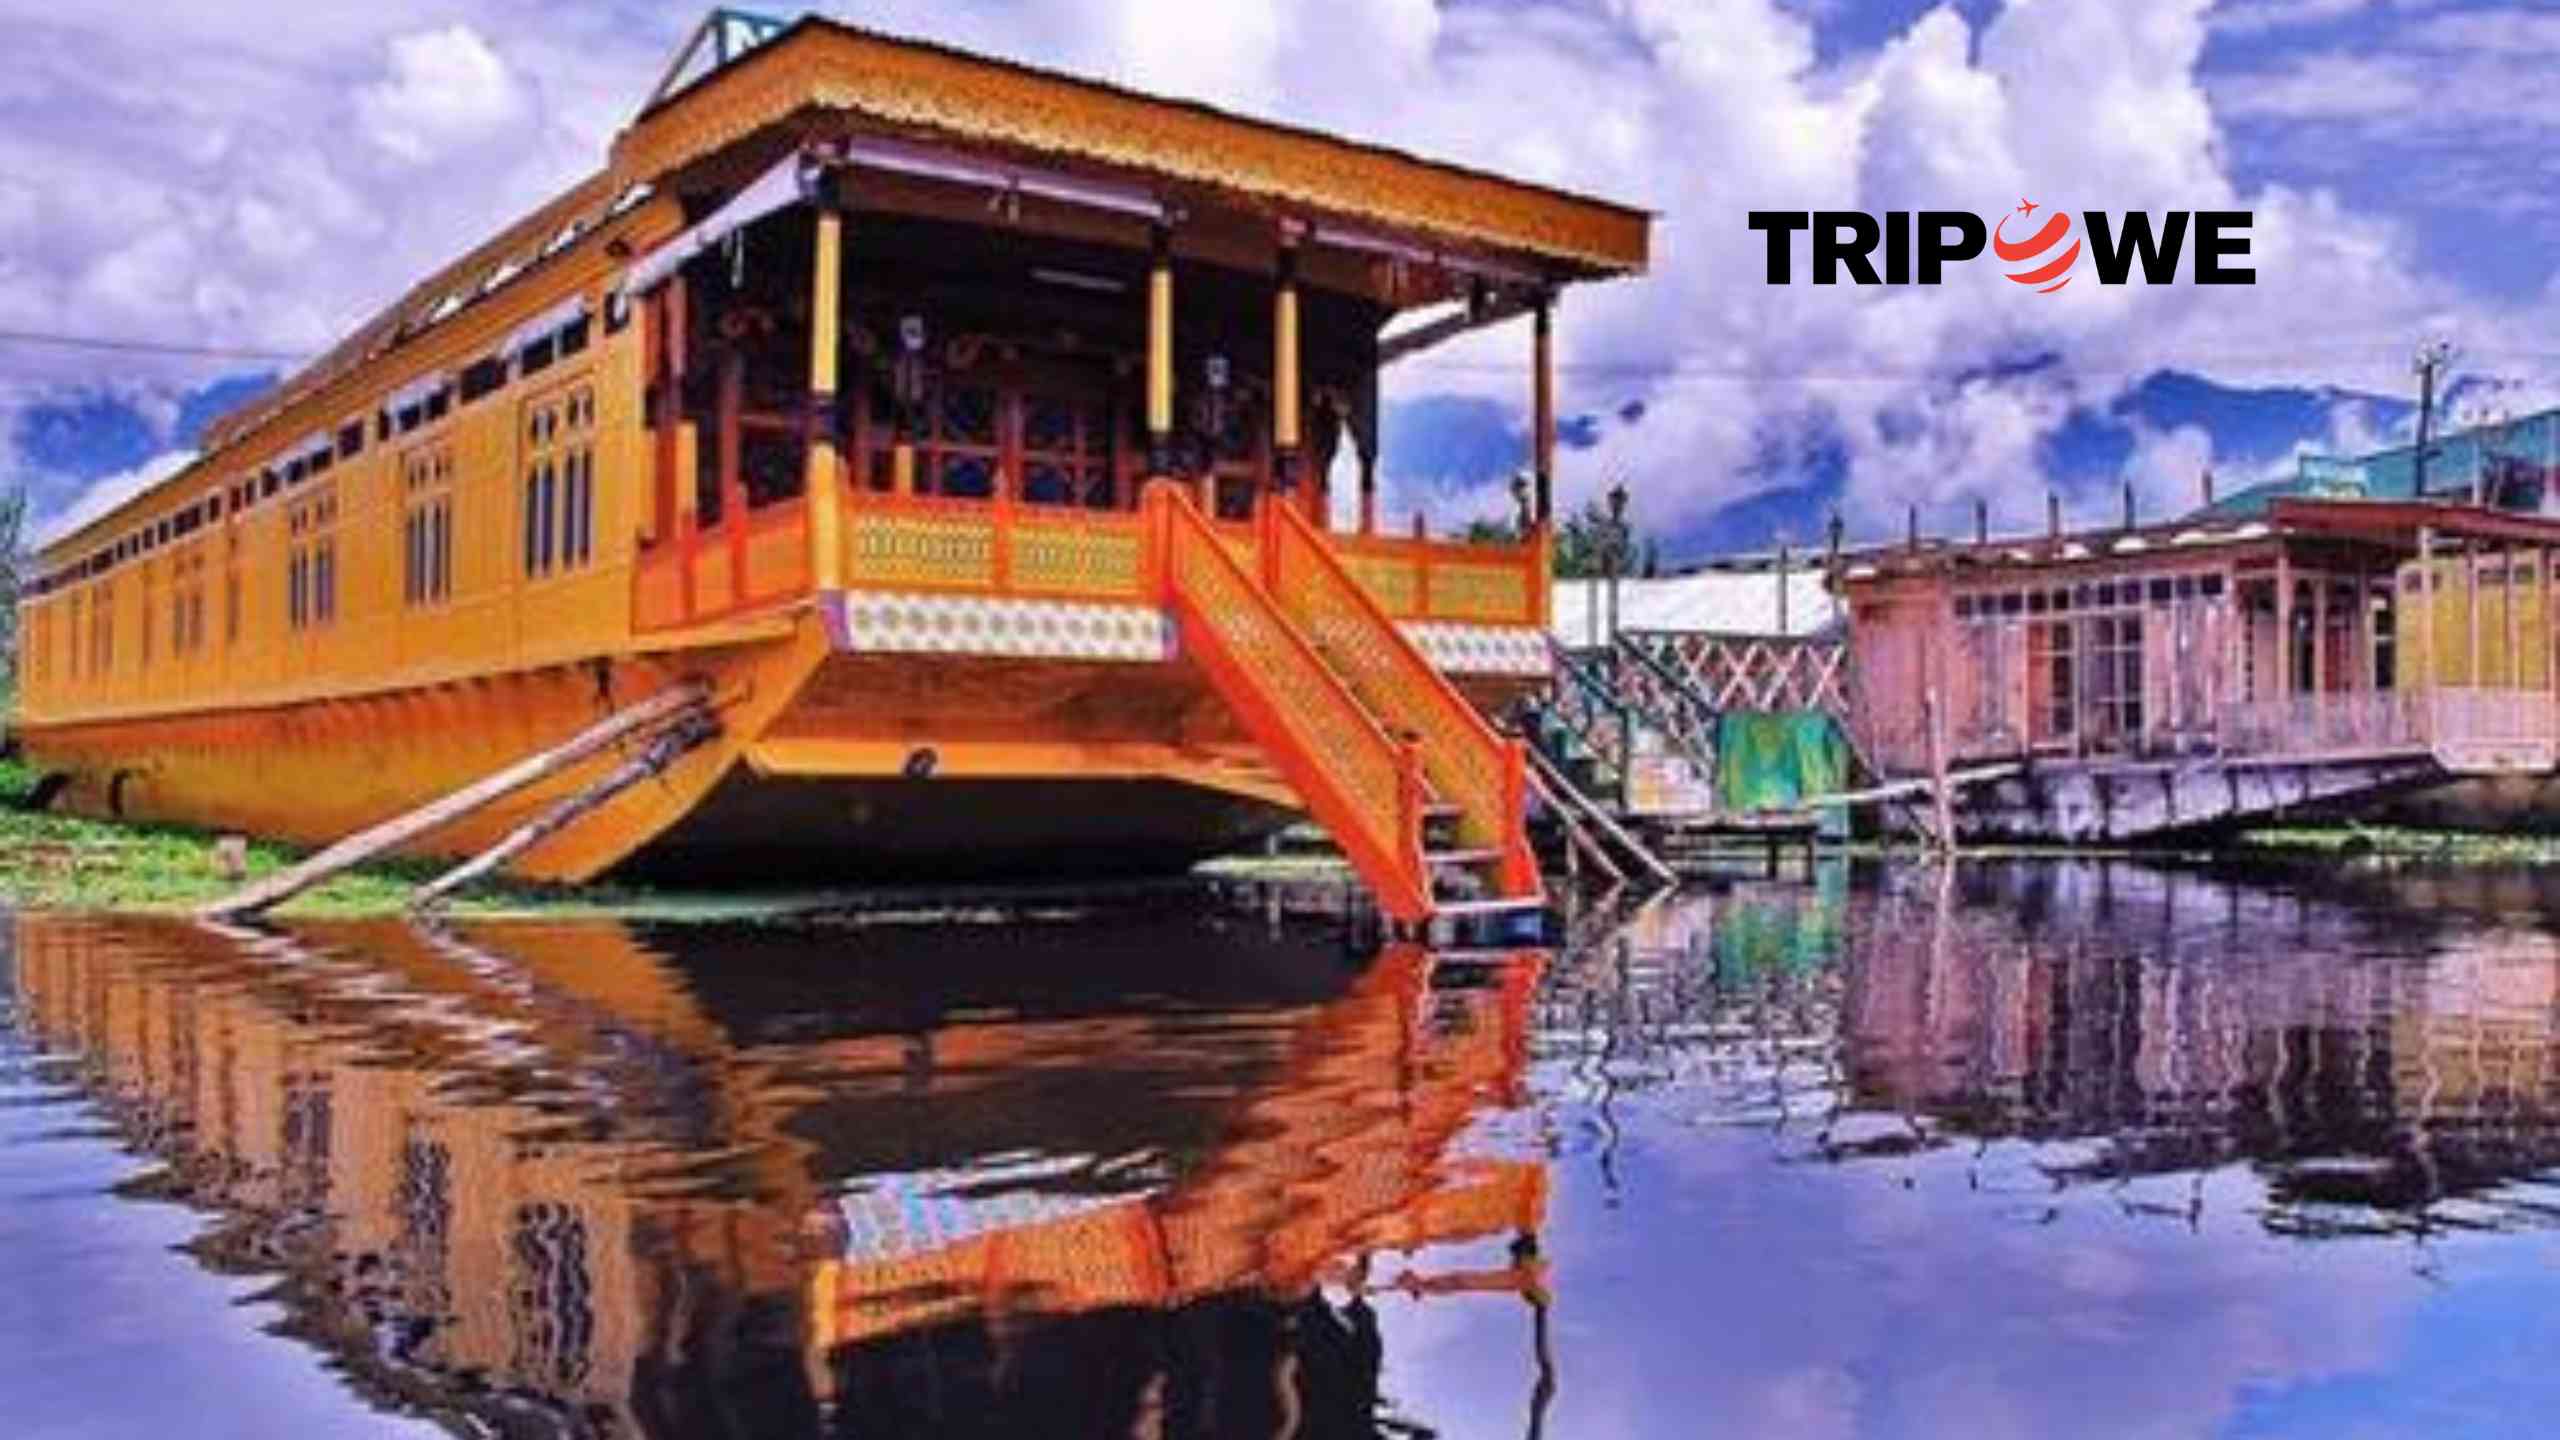 Arrive in Srinagar tripowe.com